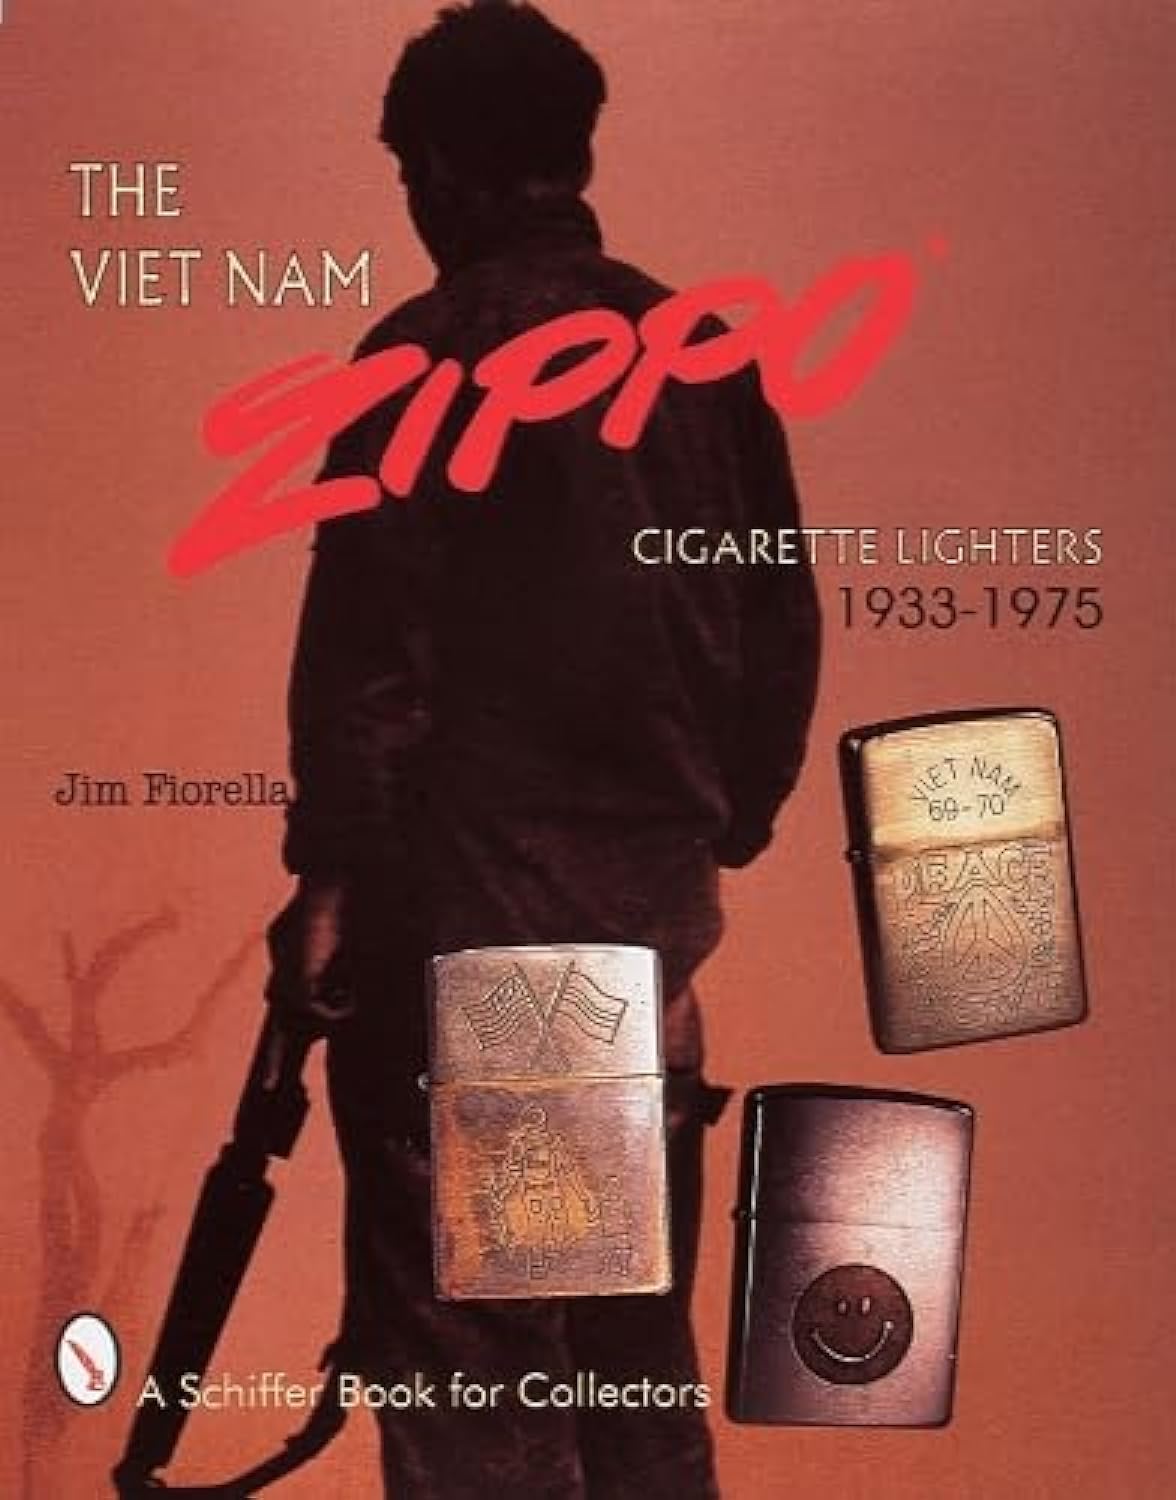 The Viet Nam Zippo Cigarette Lighters 1933-1975